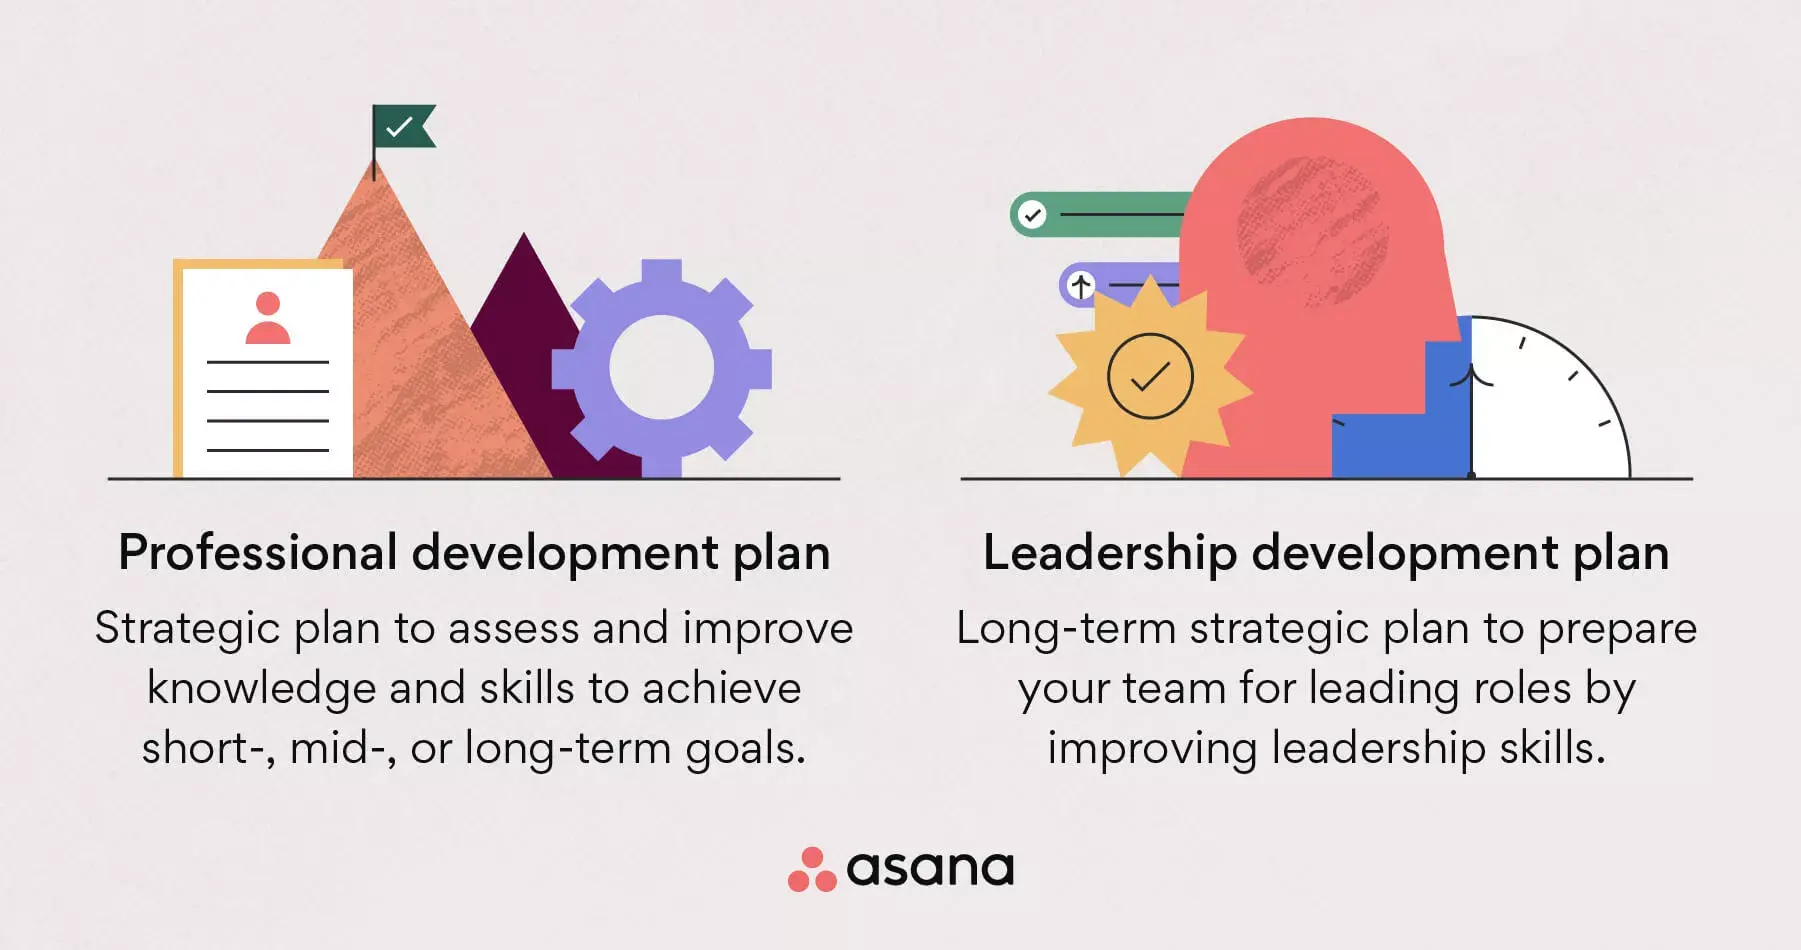 Professional development plan vs. leadership development plan